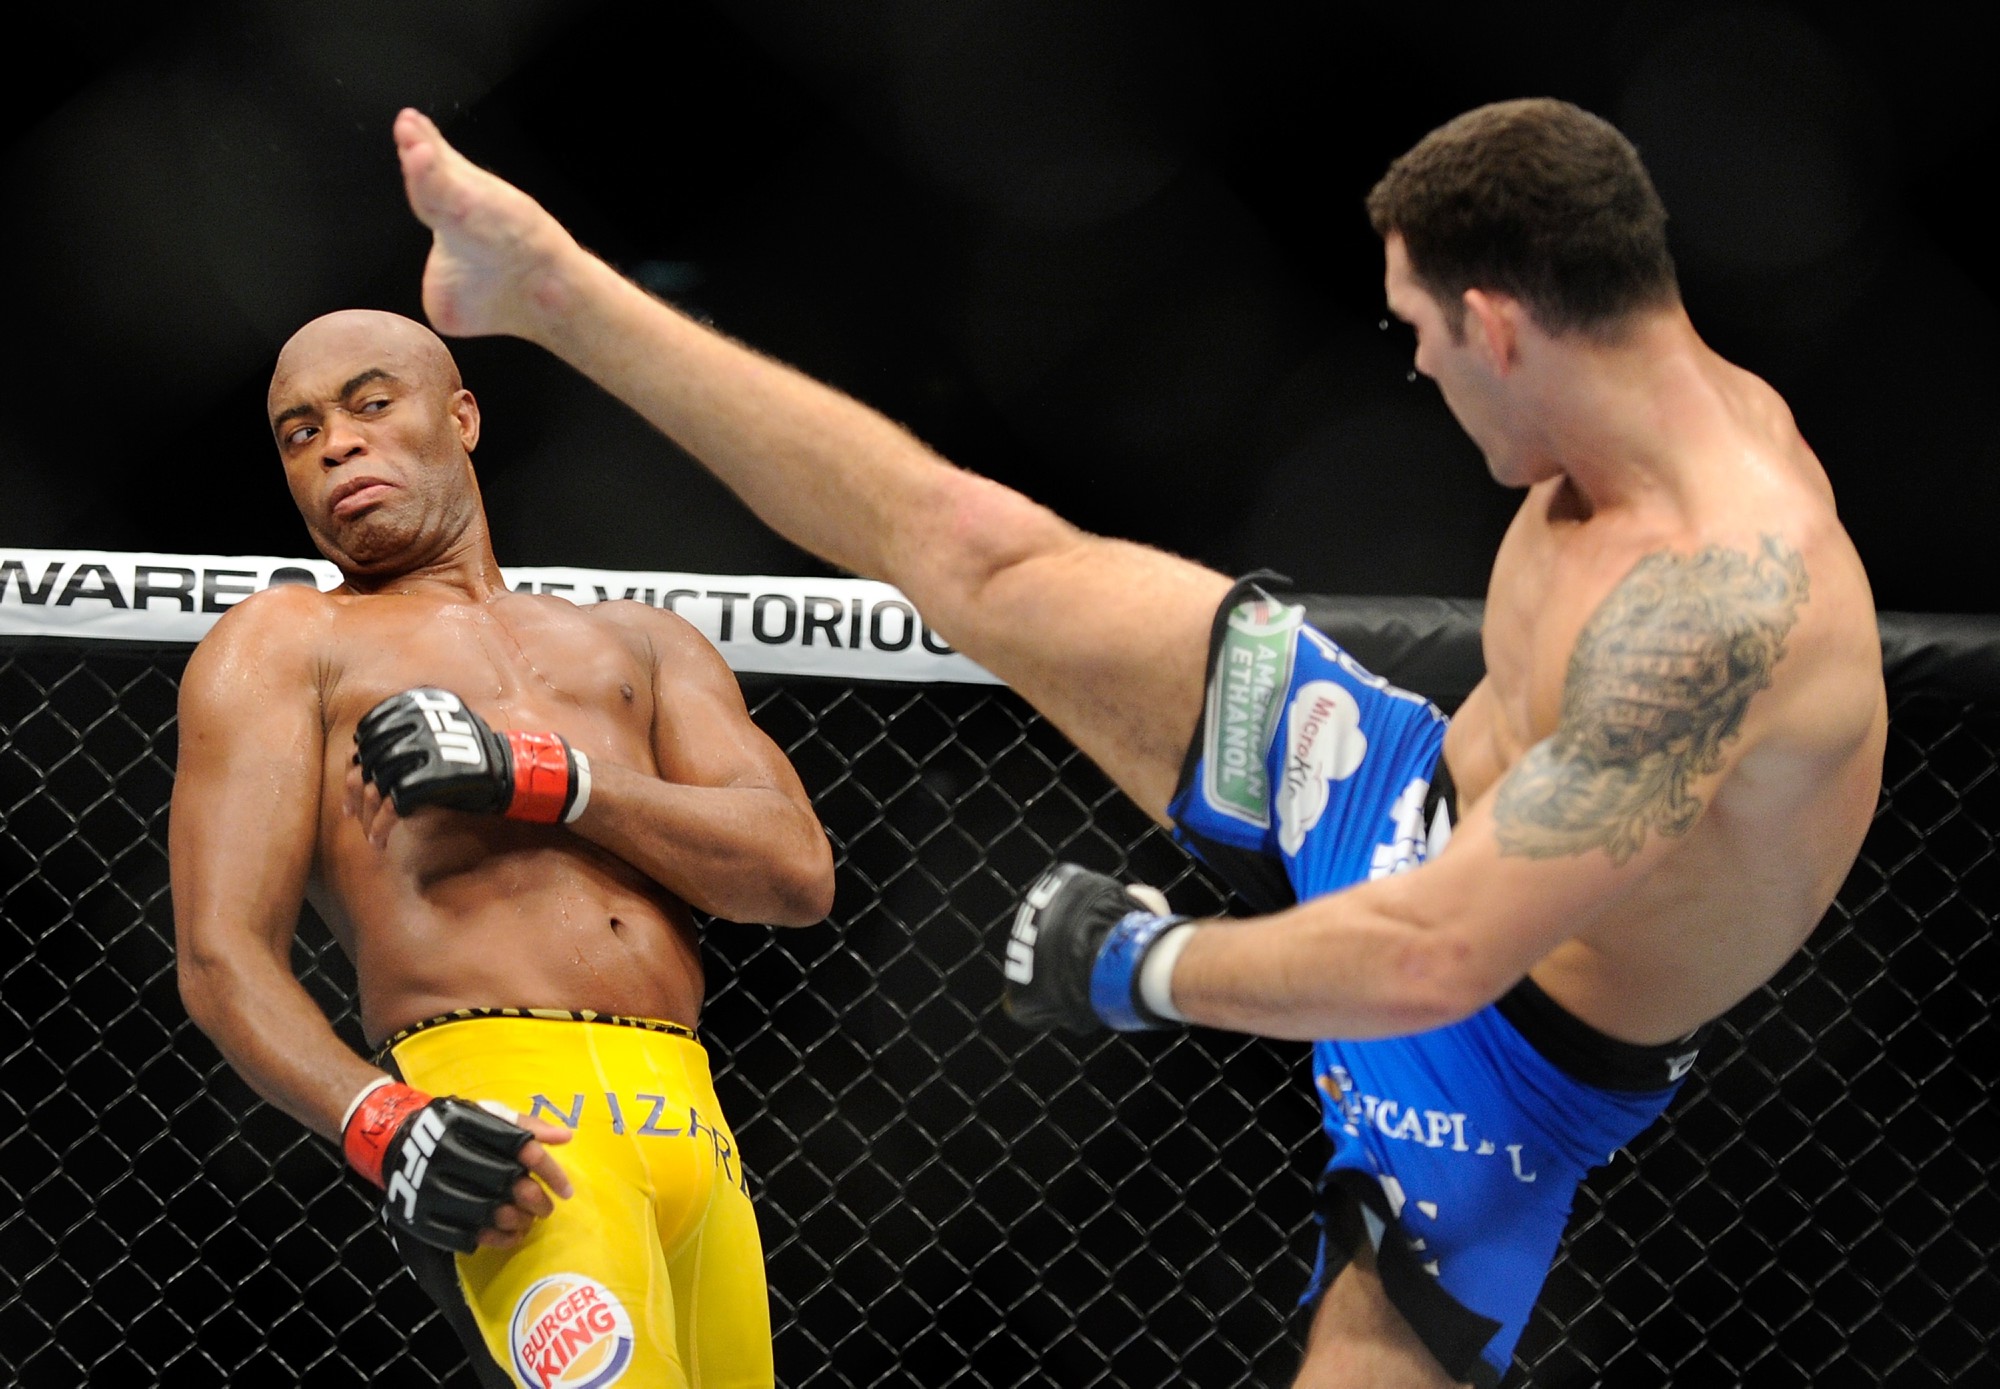 UFC Anderson Silva Leg Boxing #11425 Wallpaper | ForWallpapers.com